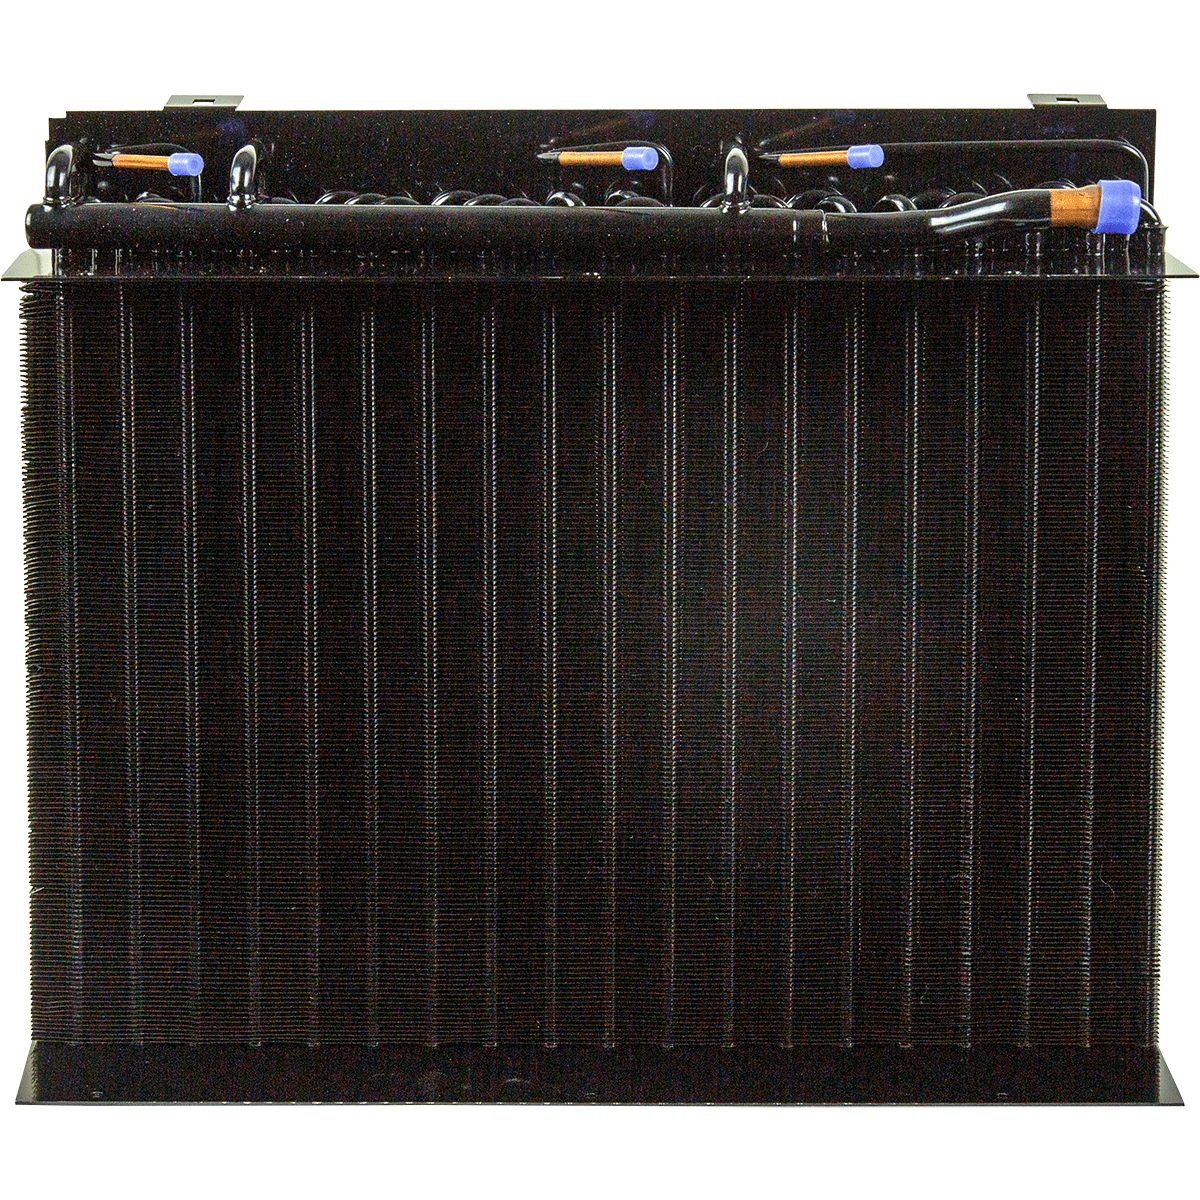 Santa Fe Replacement Evaporator Coil For Ultra120 Dehumidifier (4033859-04)